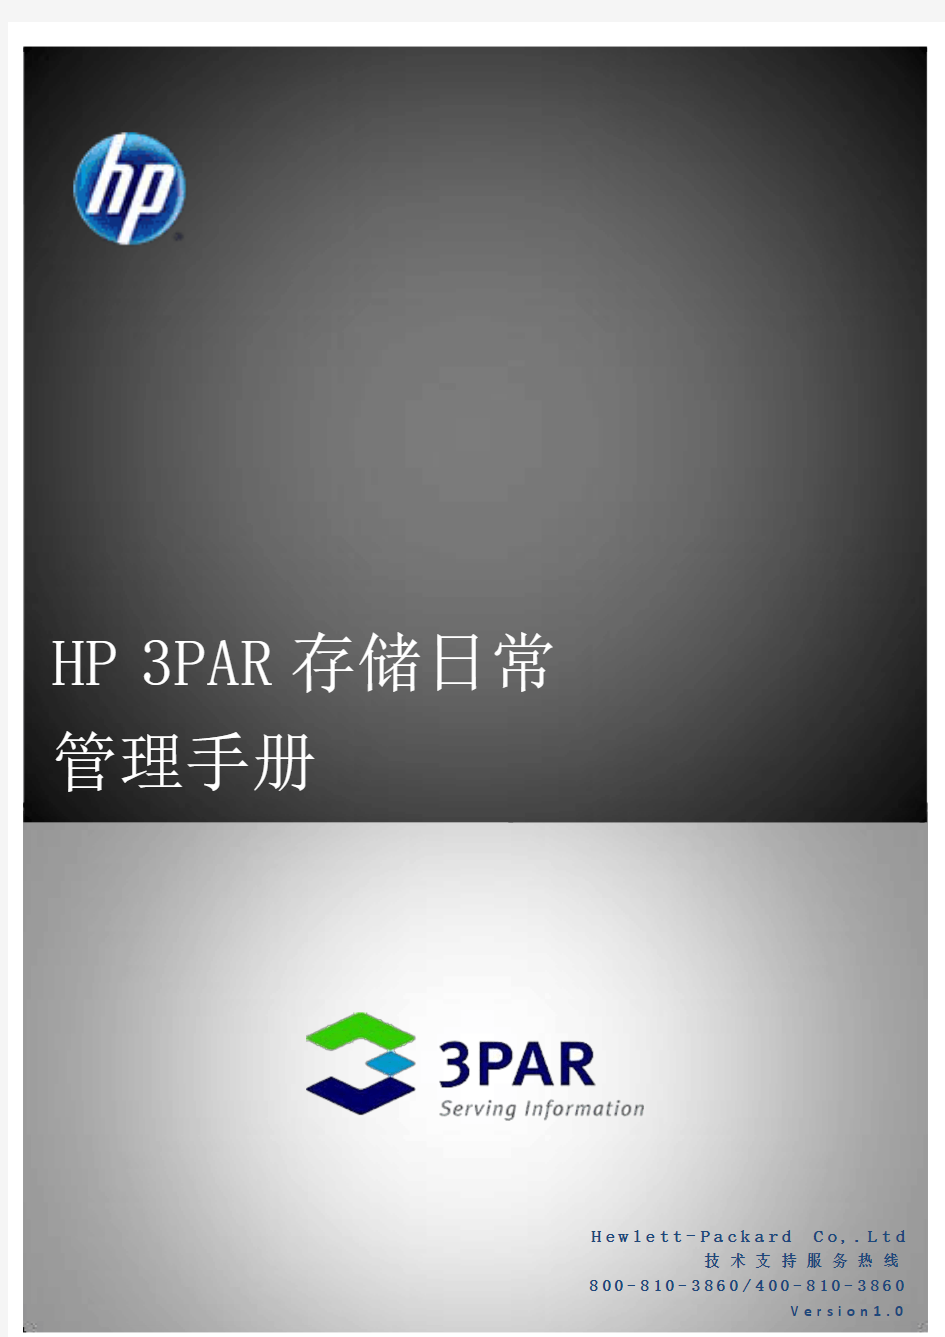 HP 3PAR存储日常管理手册v1.0